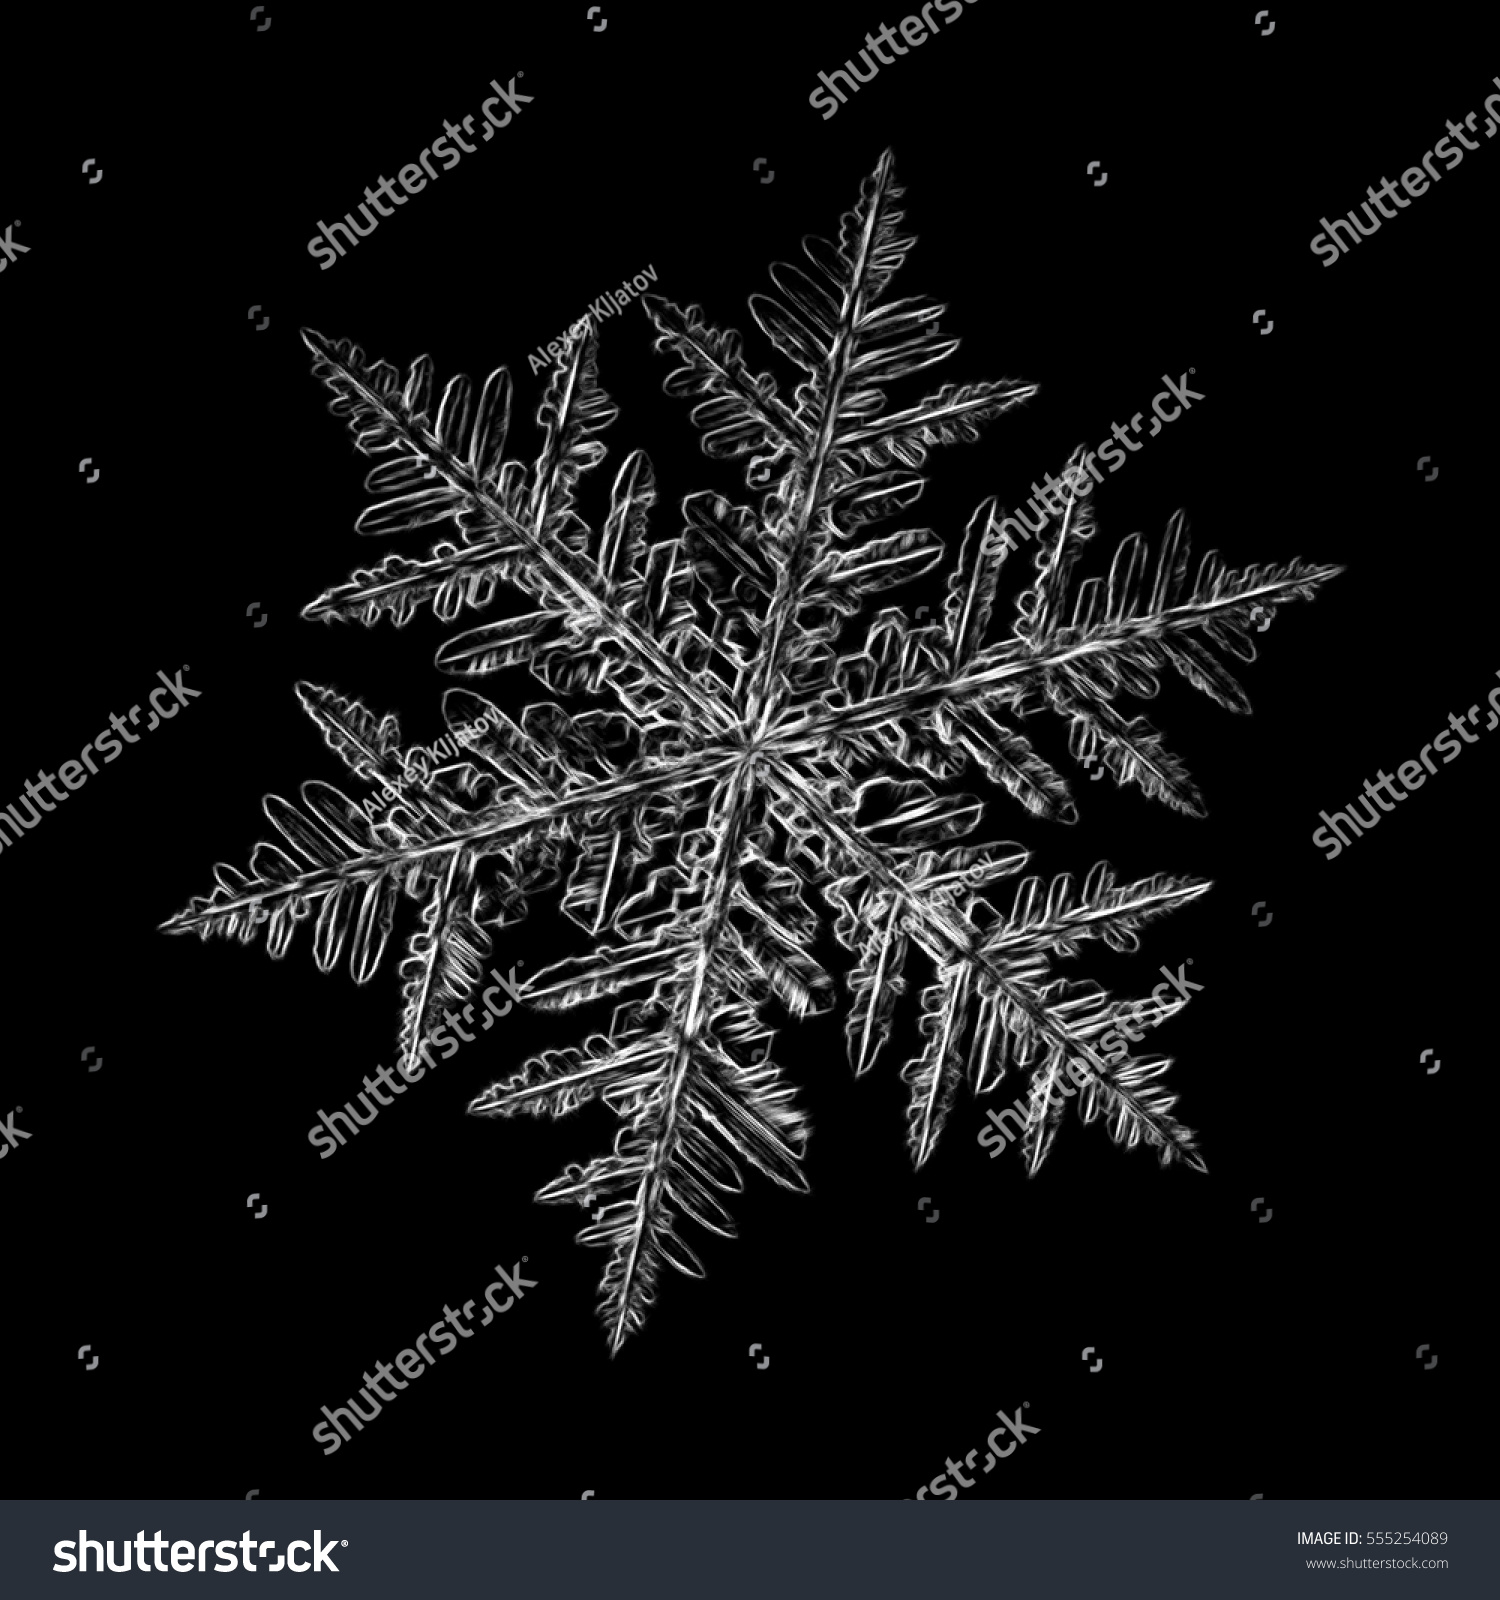  Pencil Drawing White Snowflake On Black Stock Illustration 555254089 